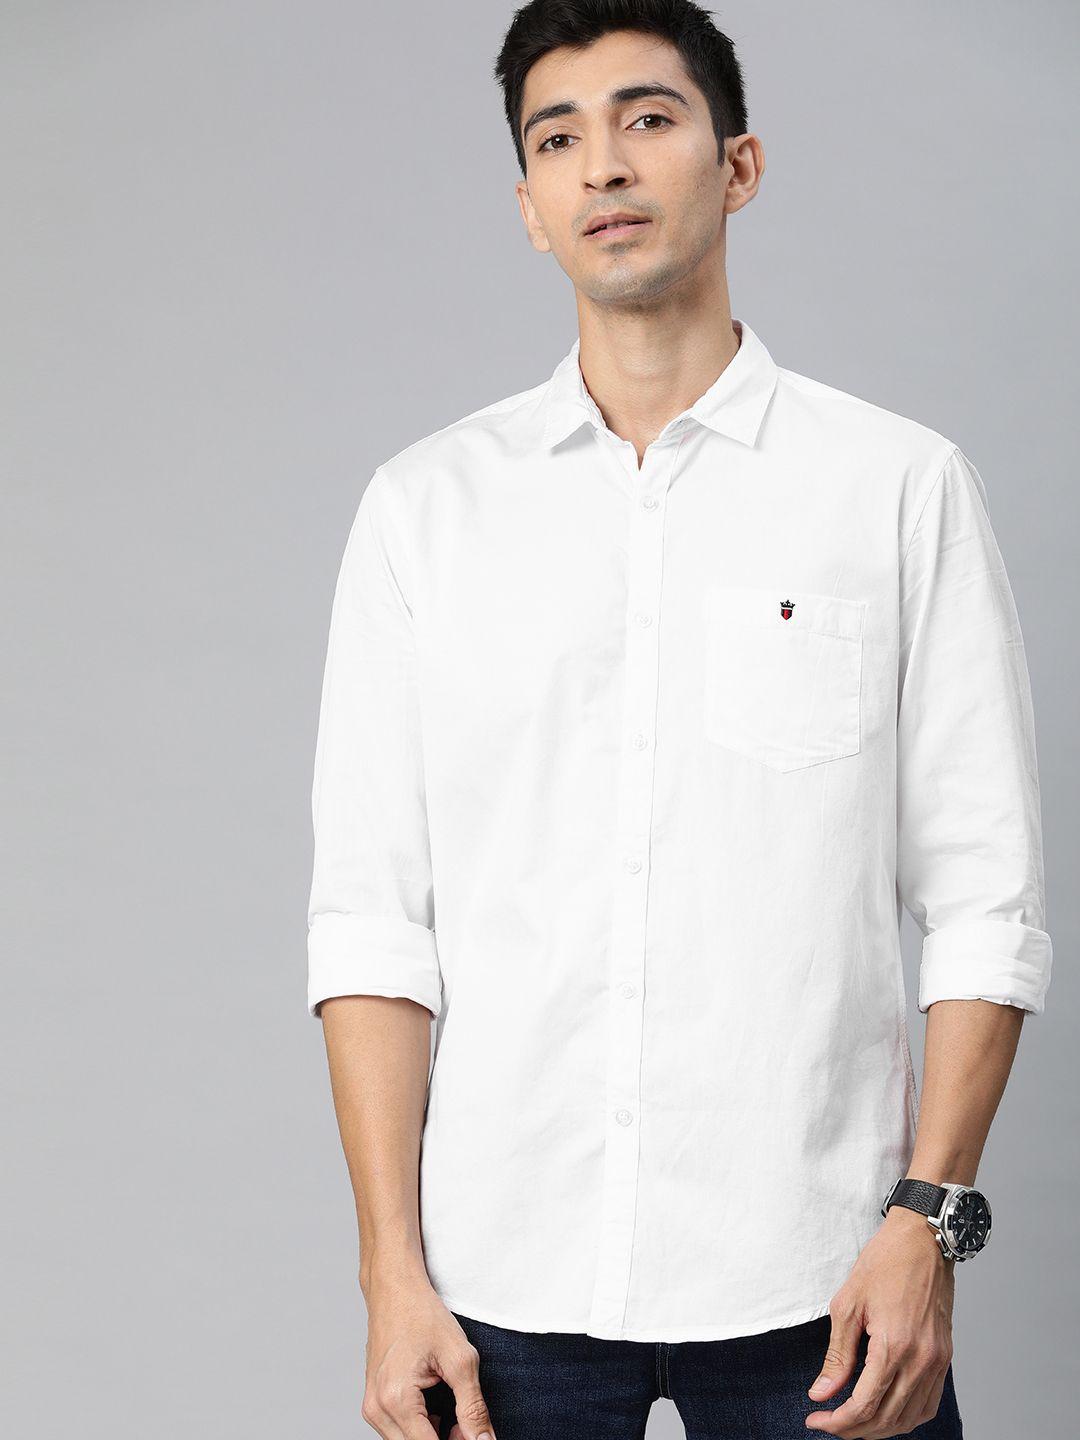 louis-philippe-jeans-men-white-slim-fit-solid-pure-cotton-casual-shirt